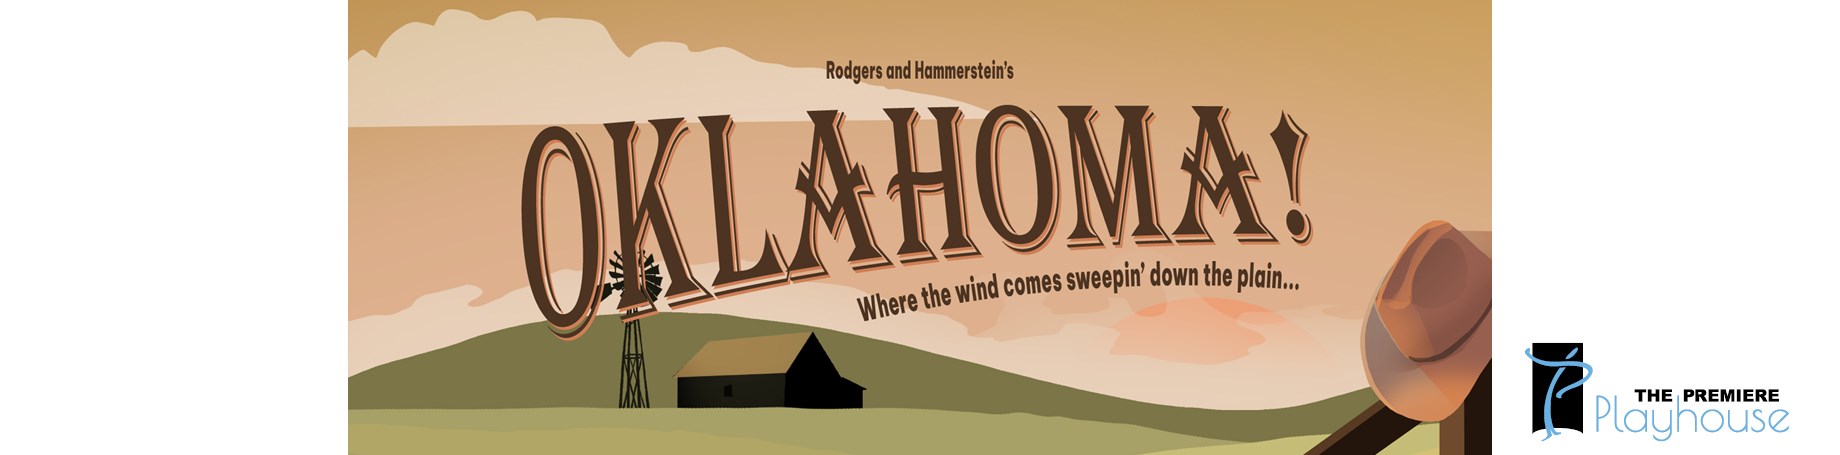 The Premiere Playhouse presents Oklahoma!